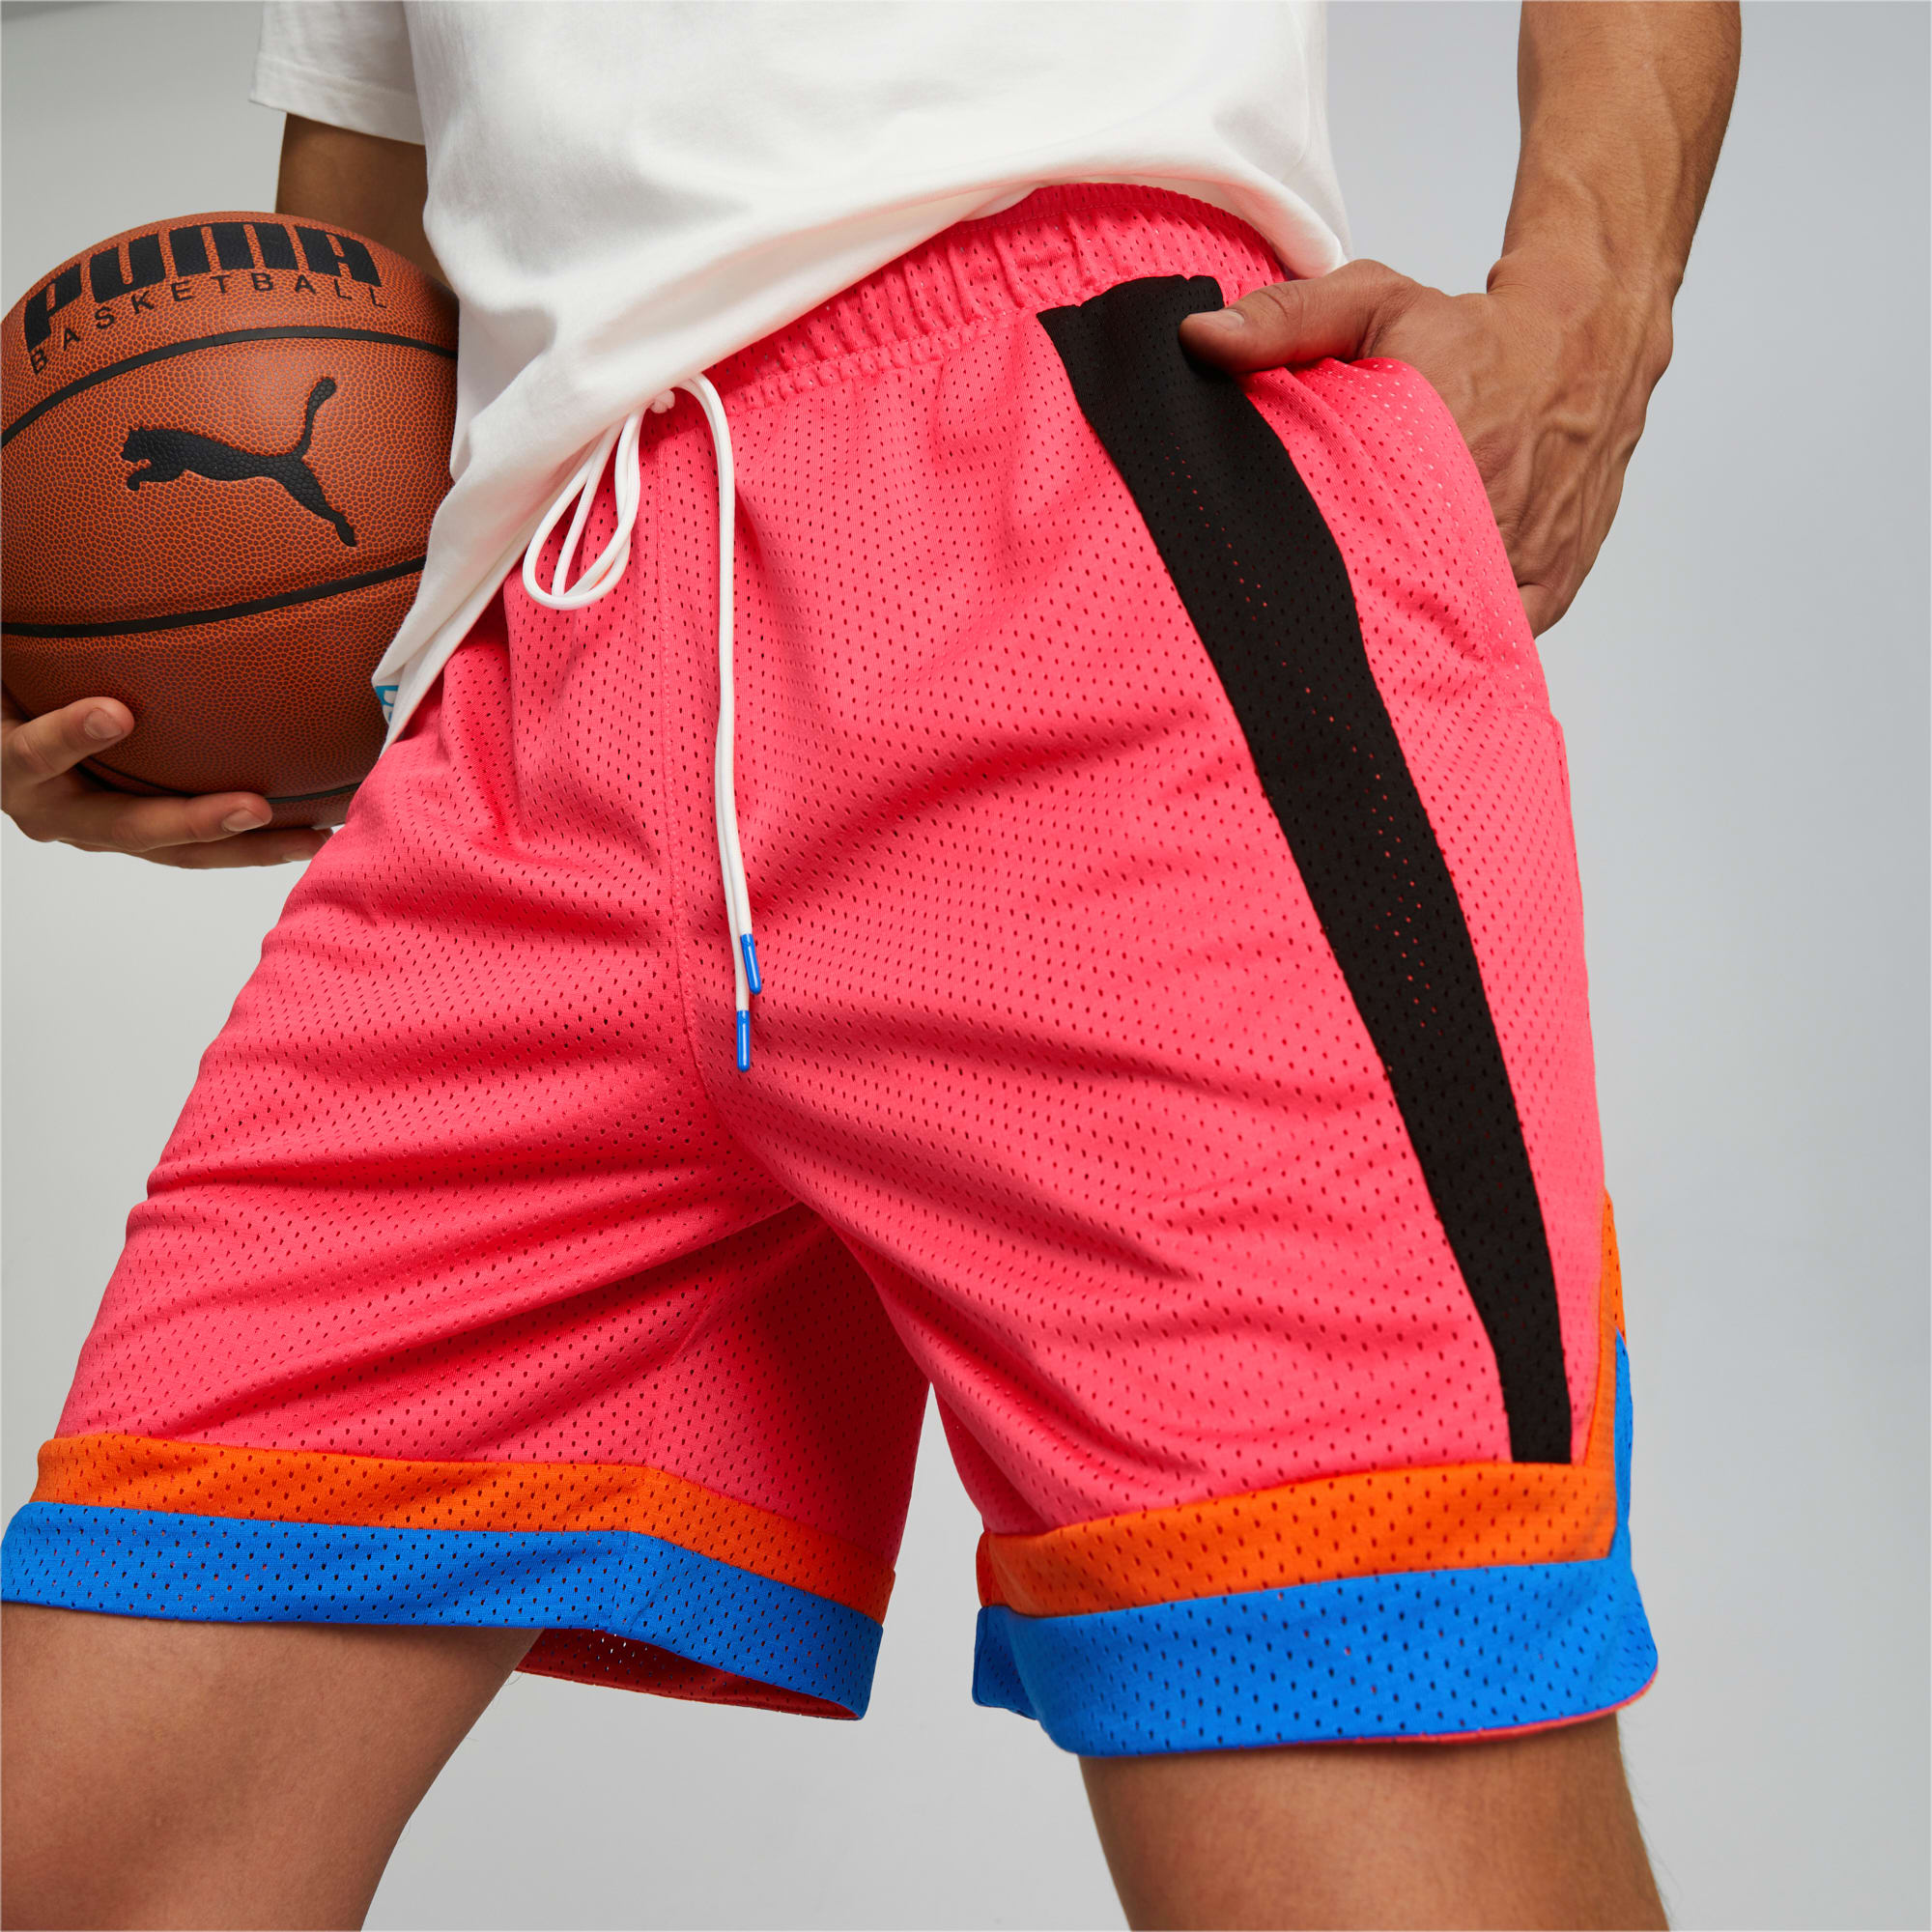 https://images.puma.com/image/upload/f_auto,q_auto,b_rgb:fafafa,w_2000,h_2000/global/538000/01/mod01/fnd/PHL/fmt/png/Melo-One-Stripe-Basketball-Shorts-Men